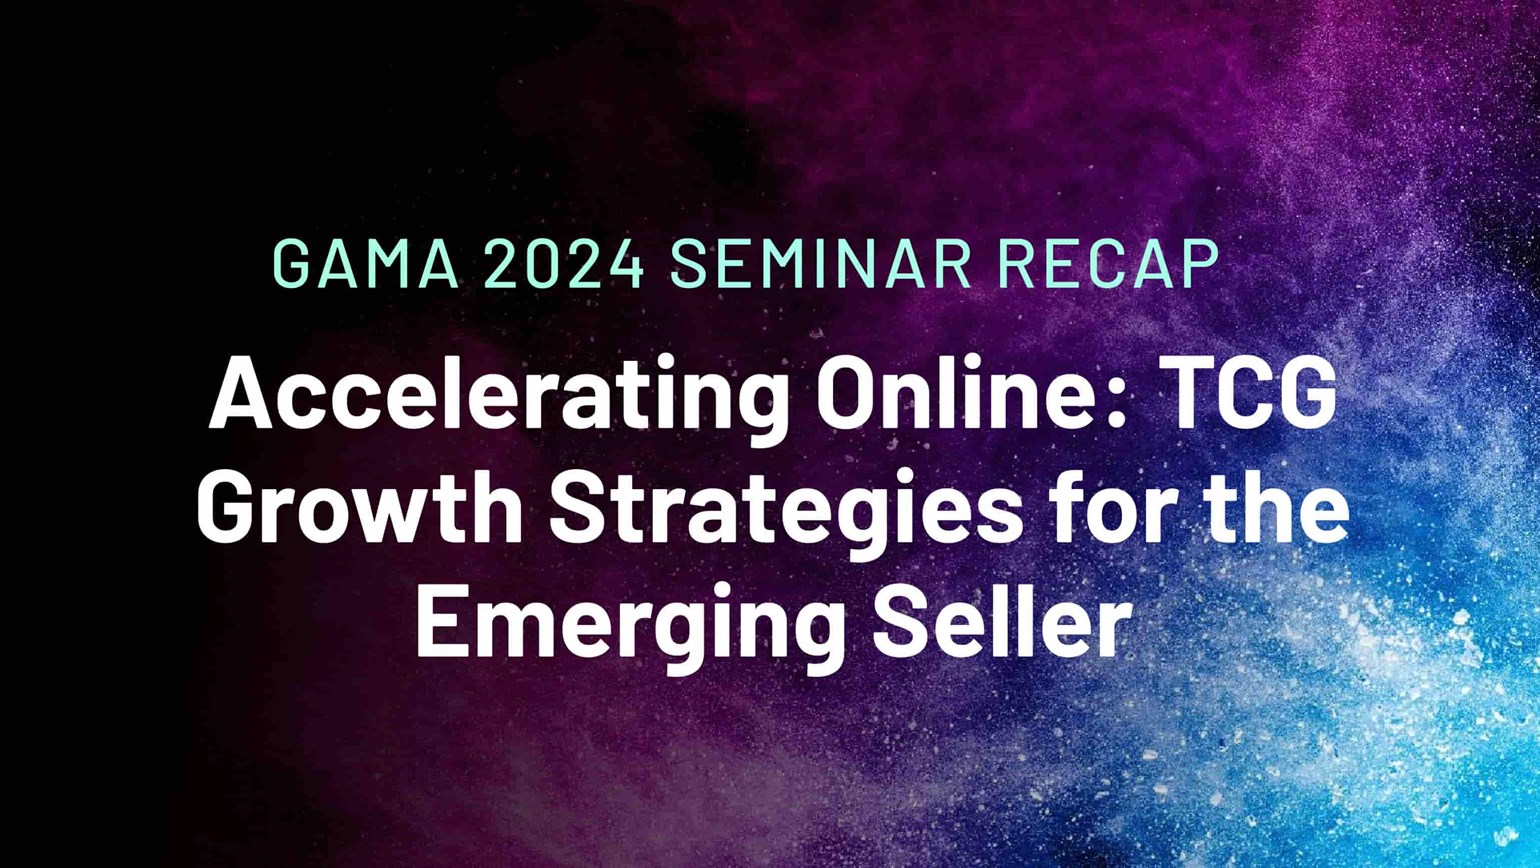 Accelerating Online: TCG Growth Strategies for the Emerging Seller – GAMA 2024 Seminar Recap